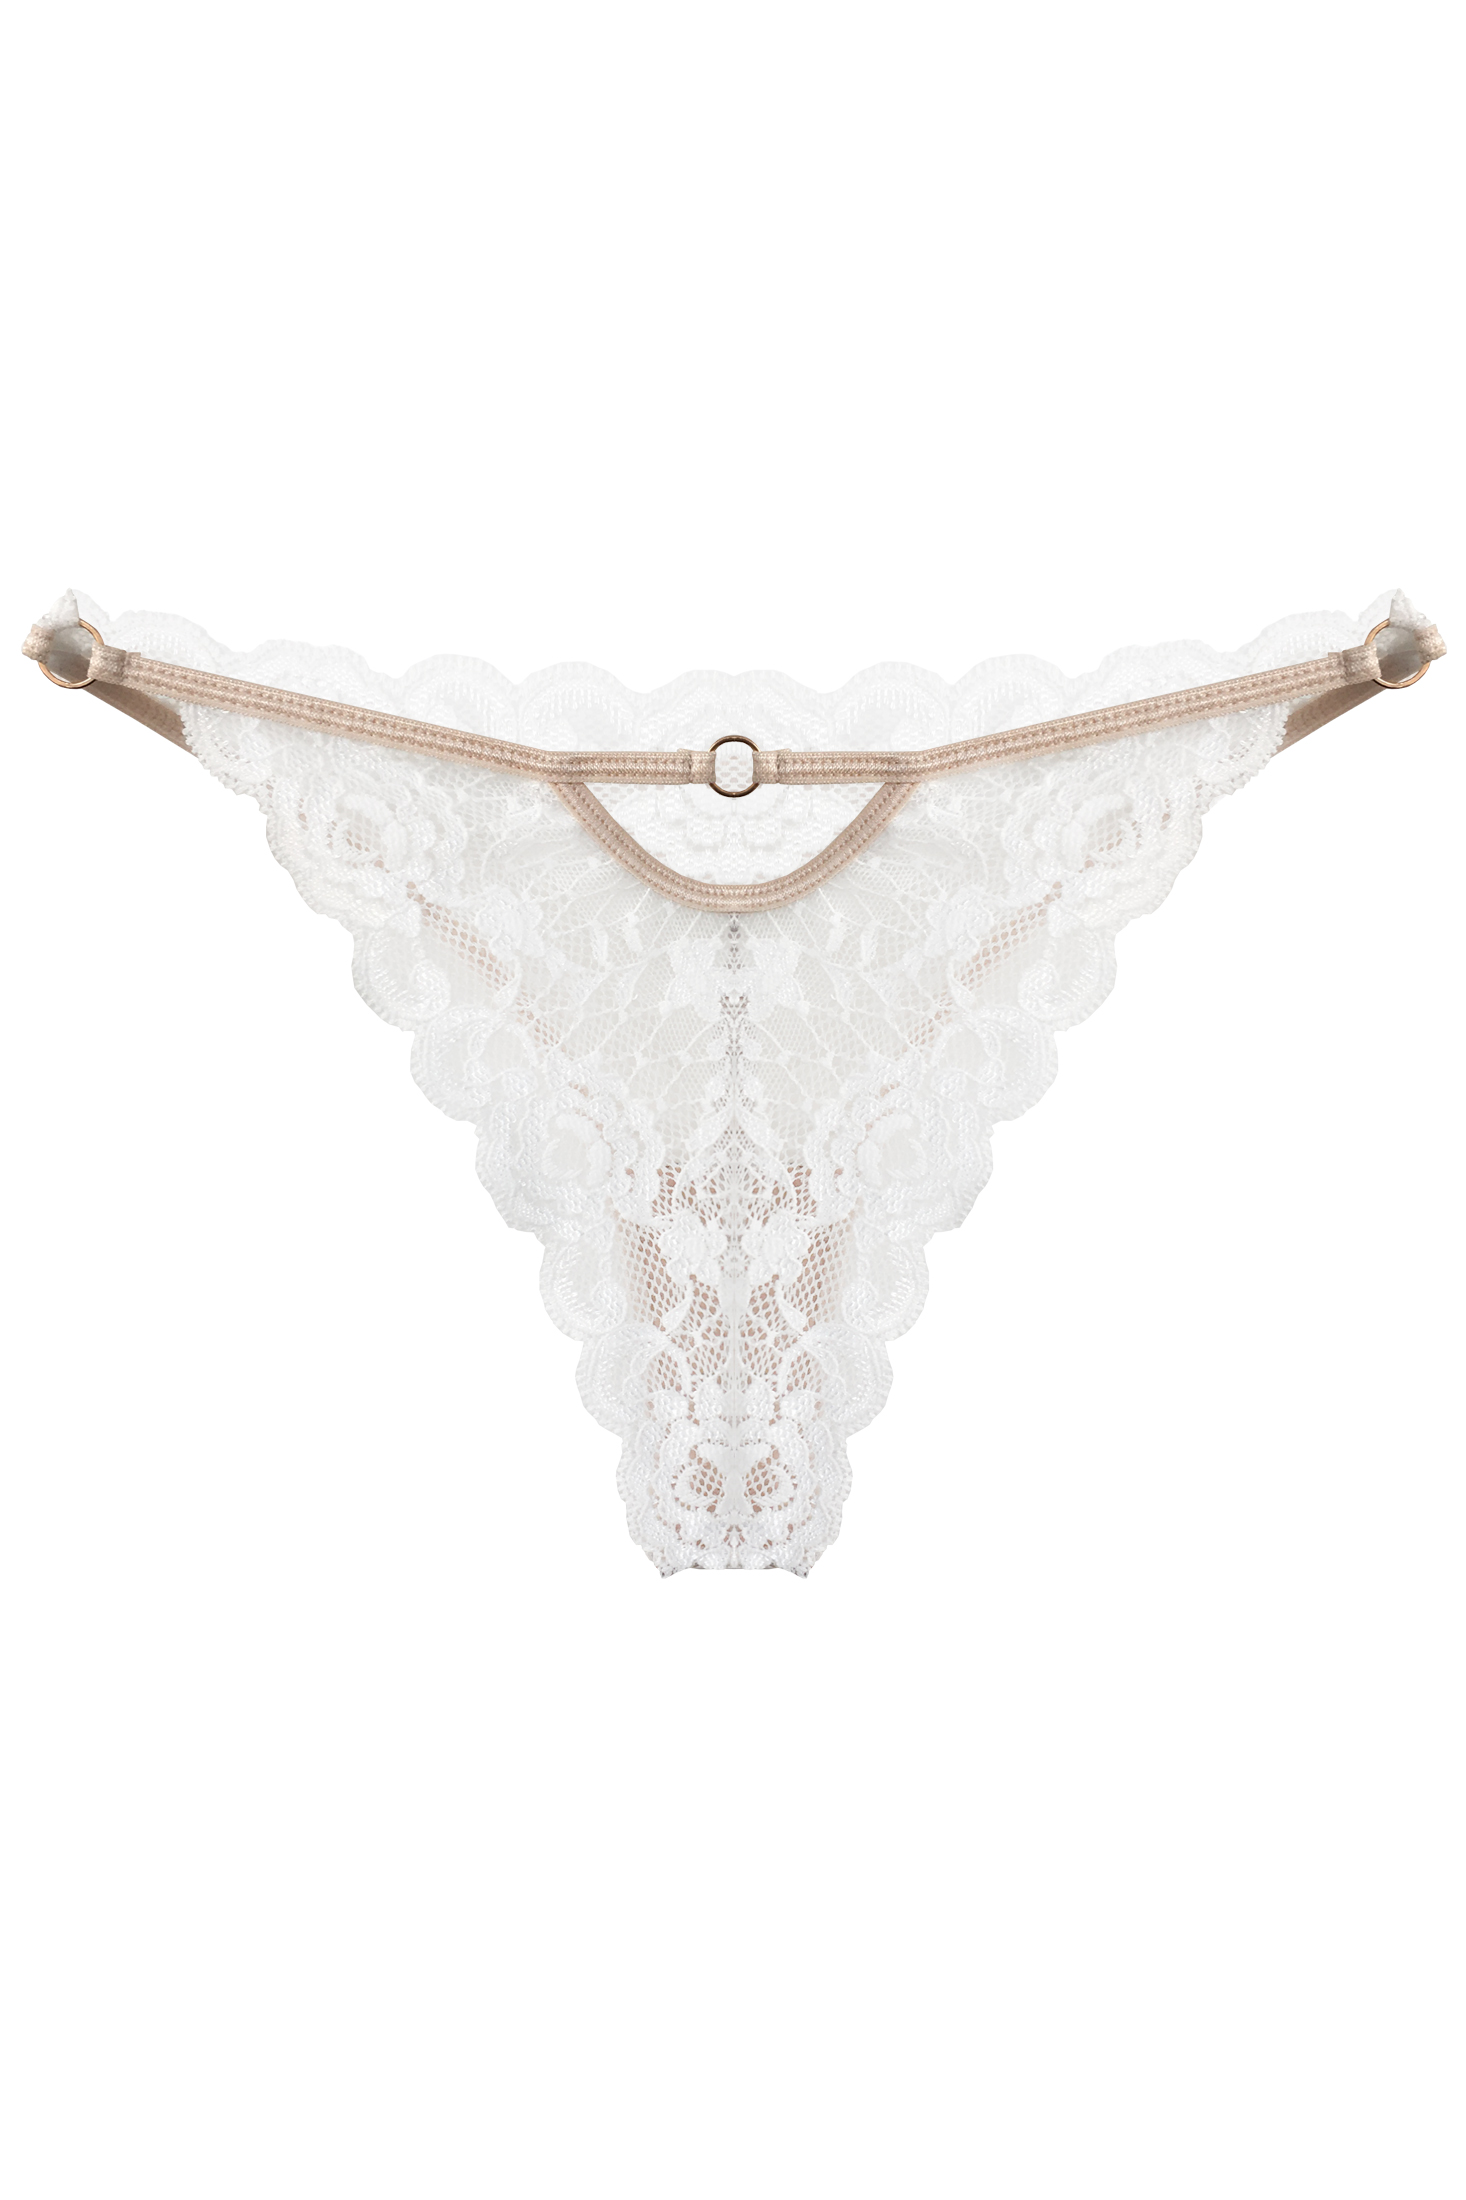 Lingerie Letters Cappuccino Thong - Women's Underwear Online